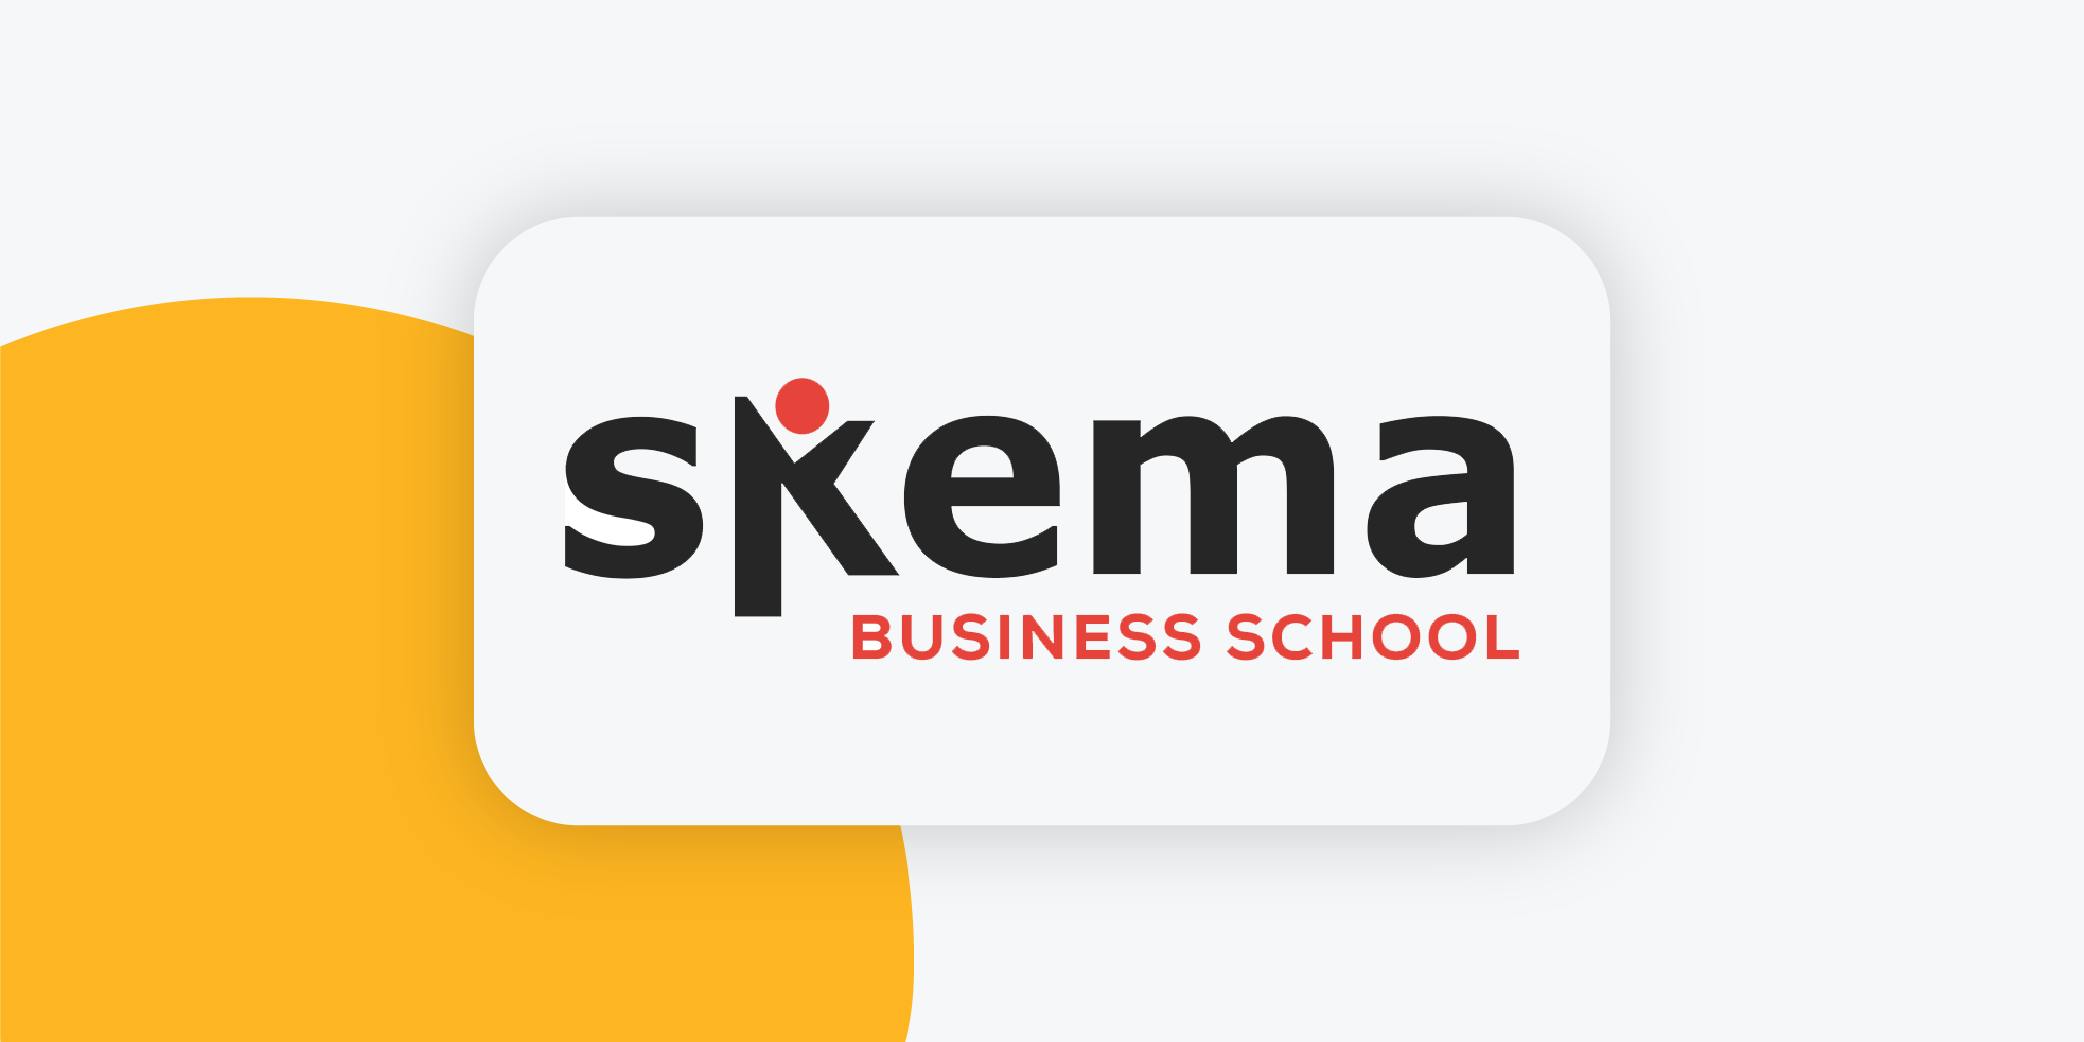 Skema Business School logo